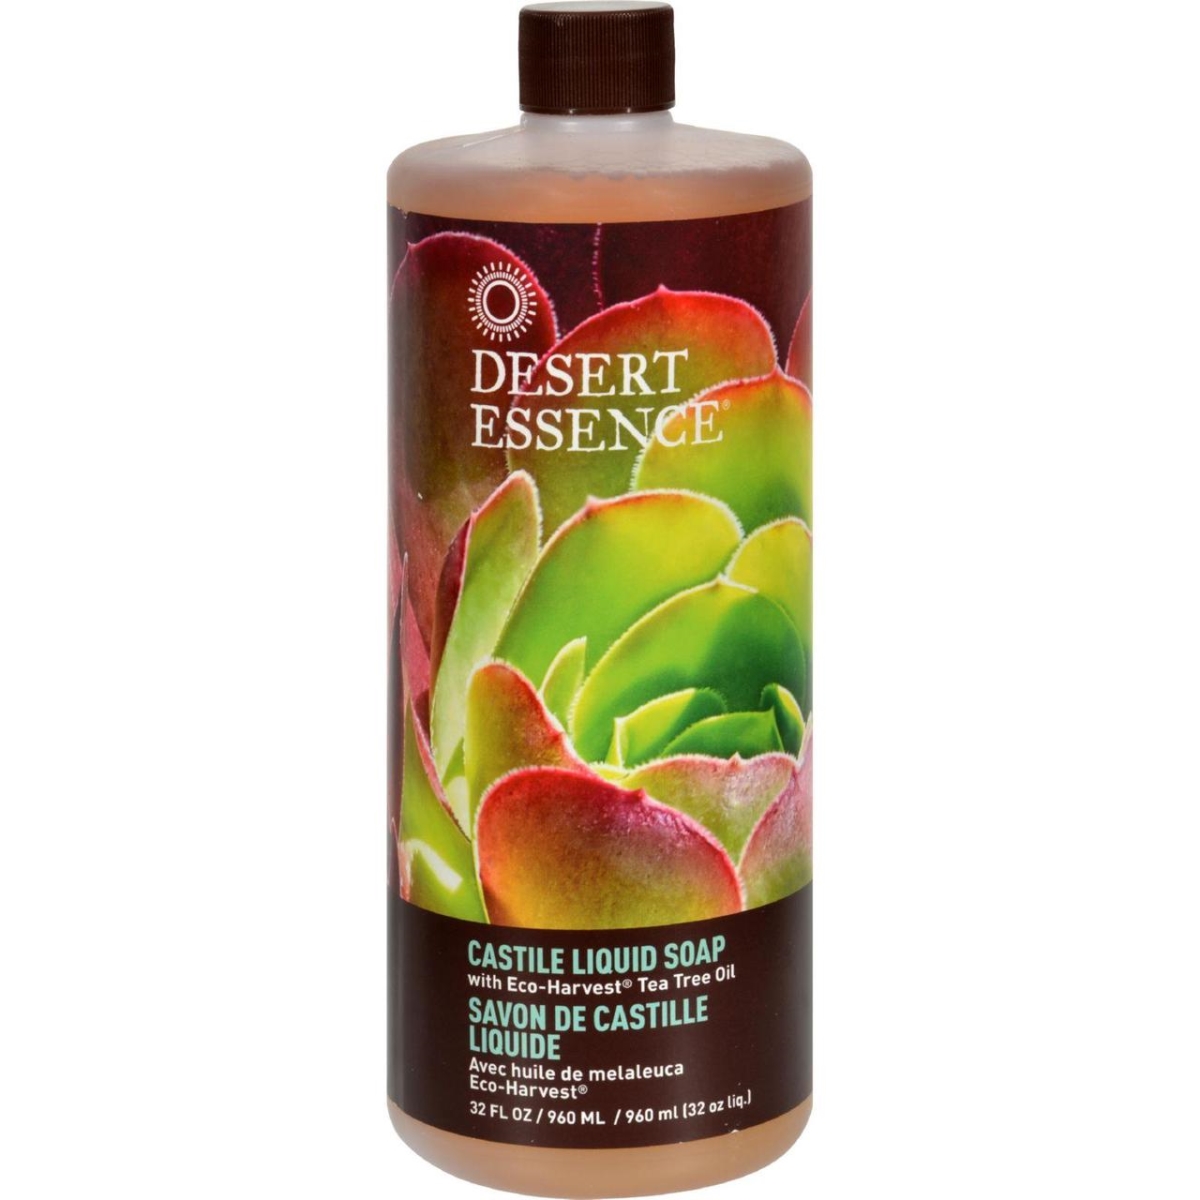 Hg0583385 32 Fl Oz Castile Liquid Soap With Eco-harvest Tea Tree Oil